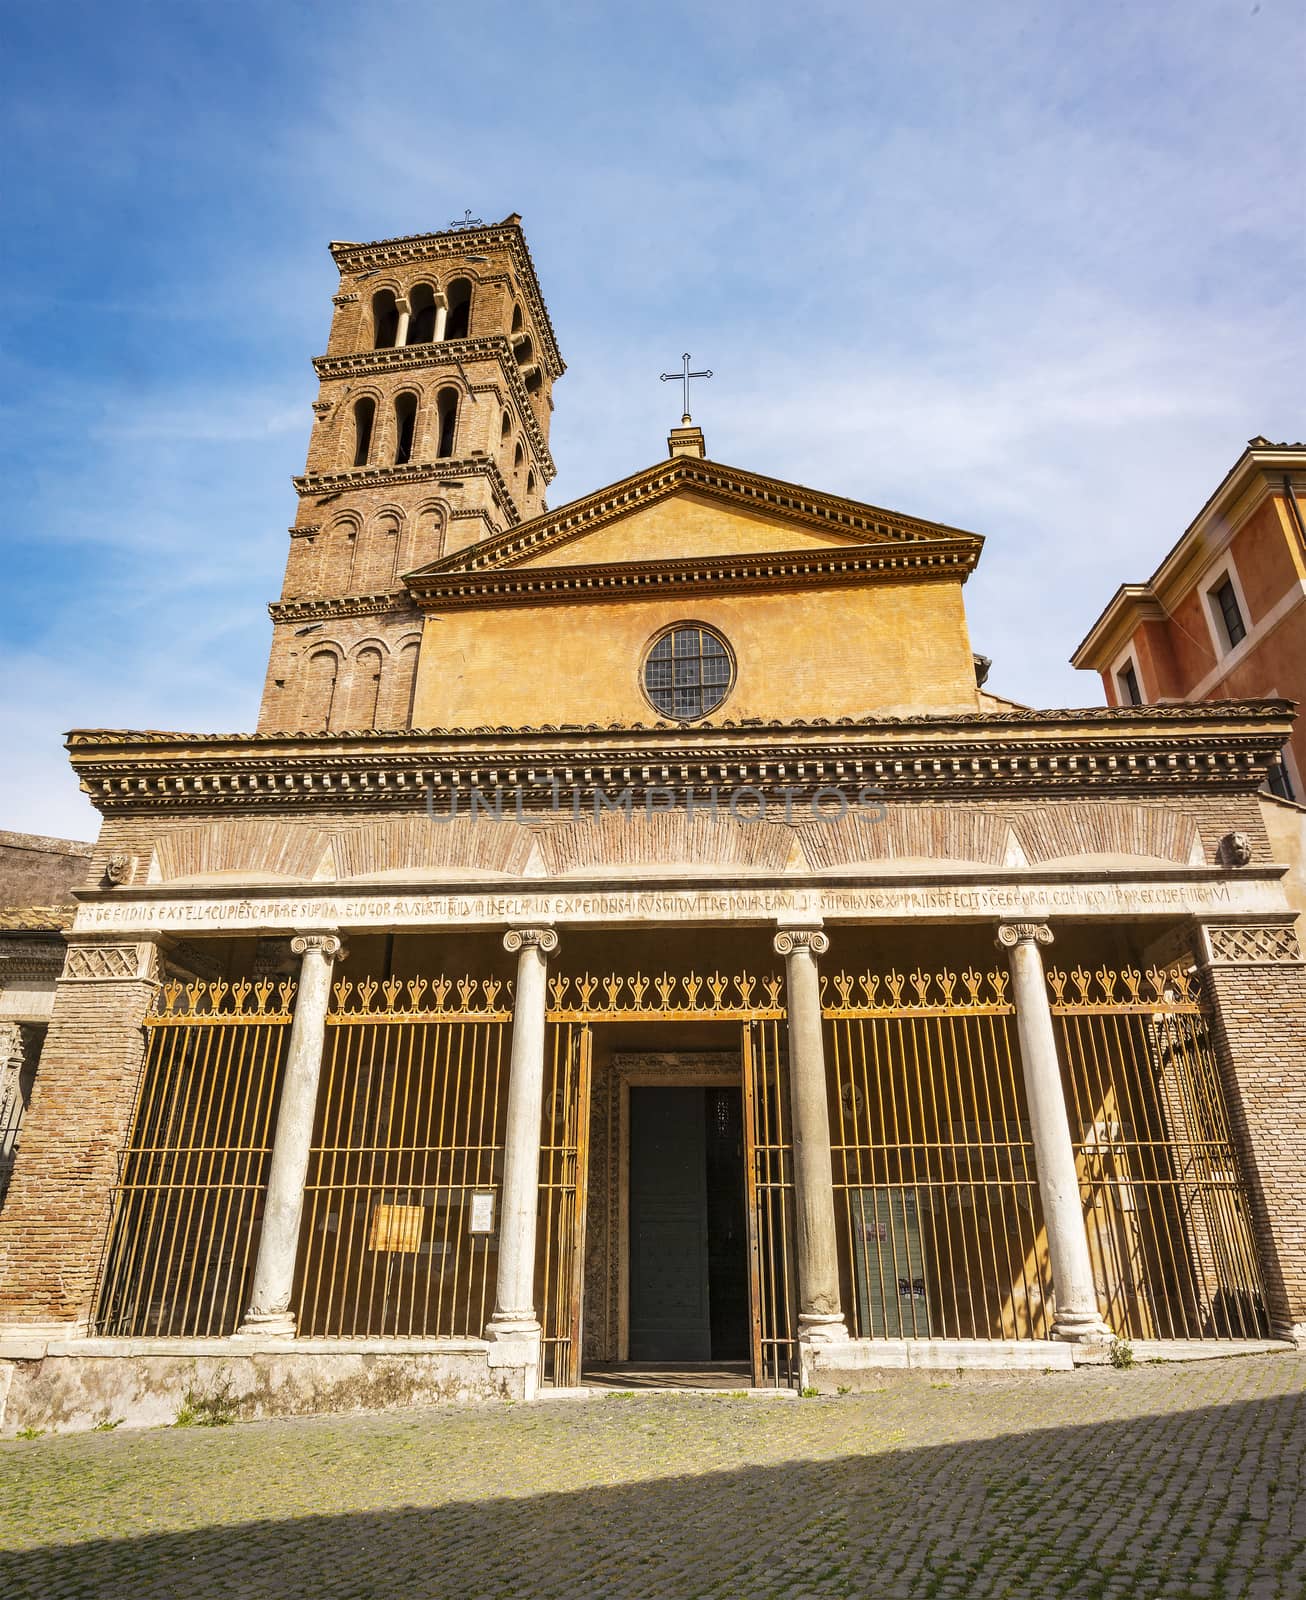 San Giorgio in Velabro church facade in Rome, built by greeks in 7th century,